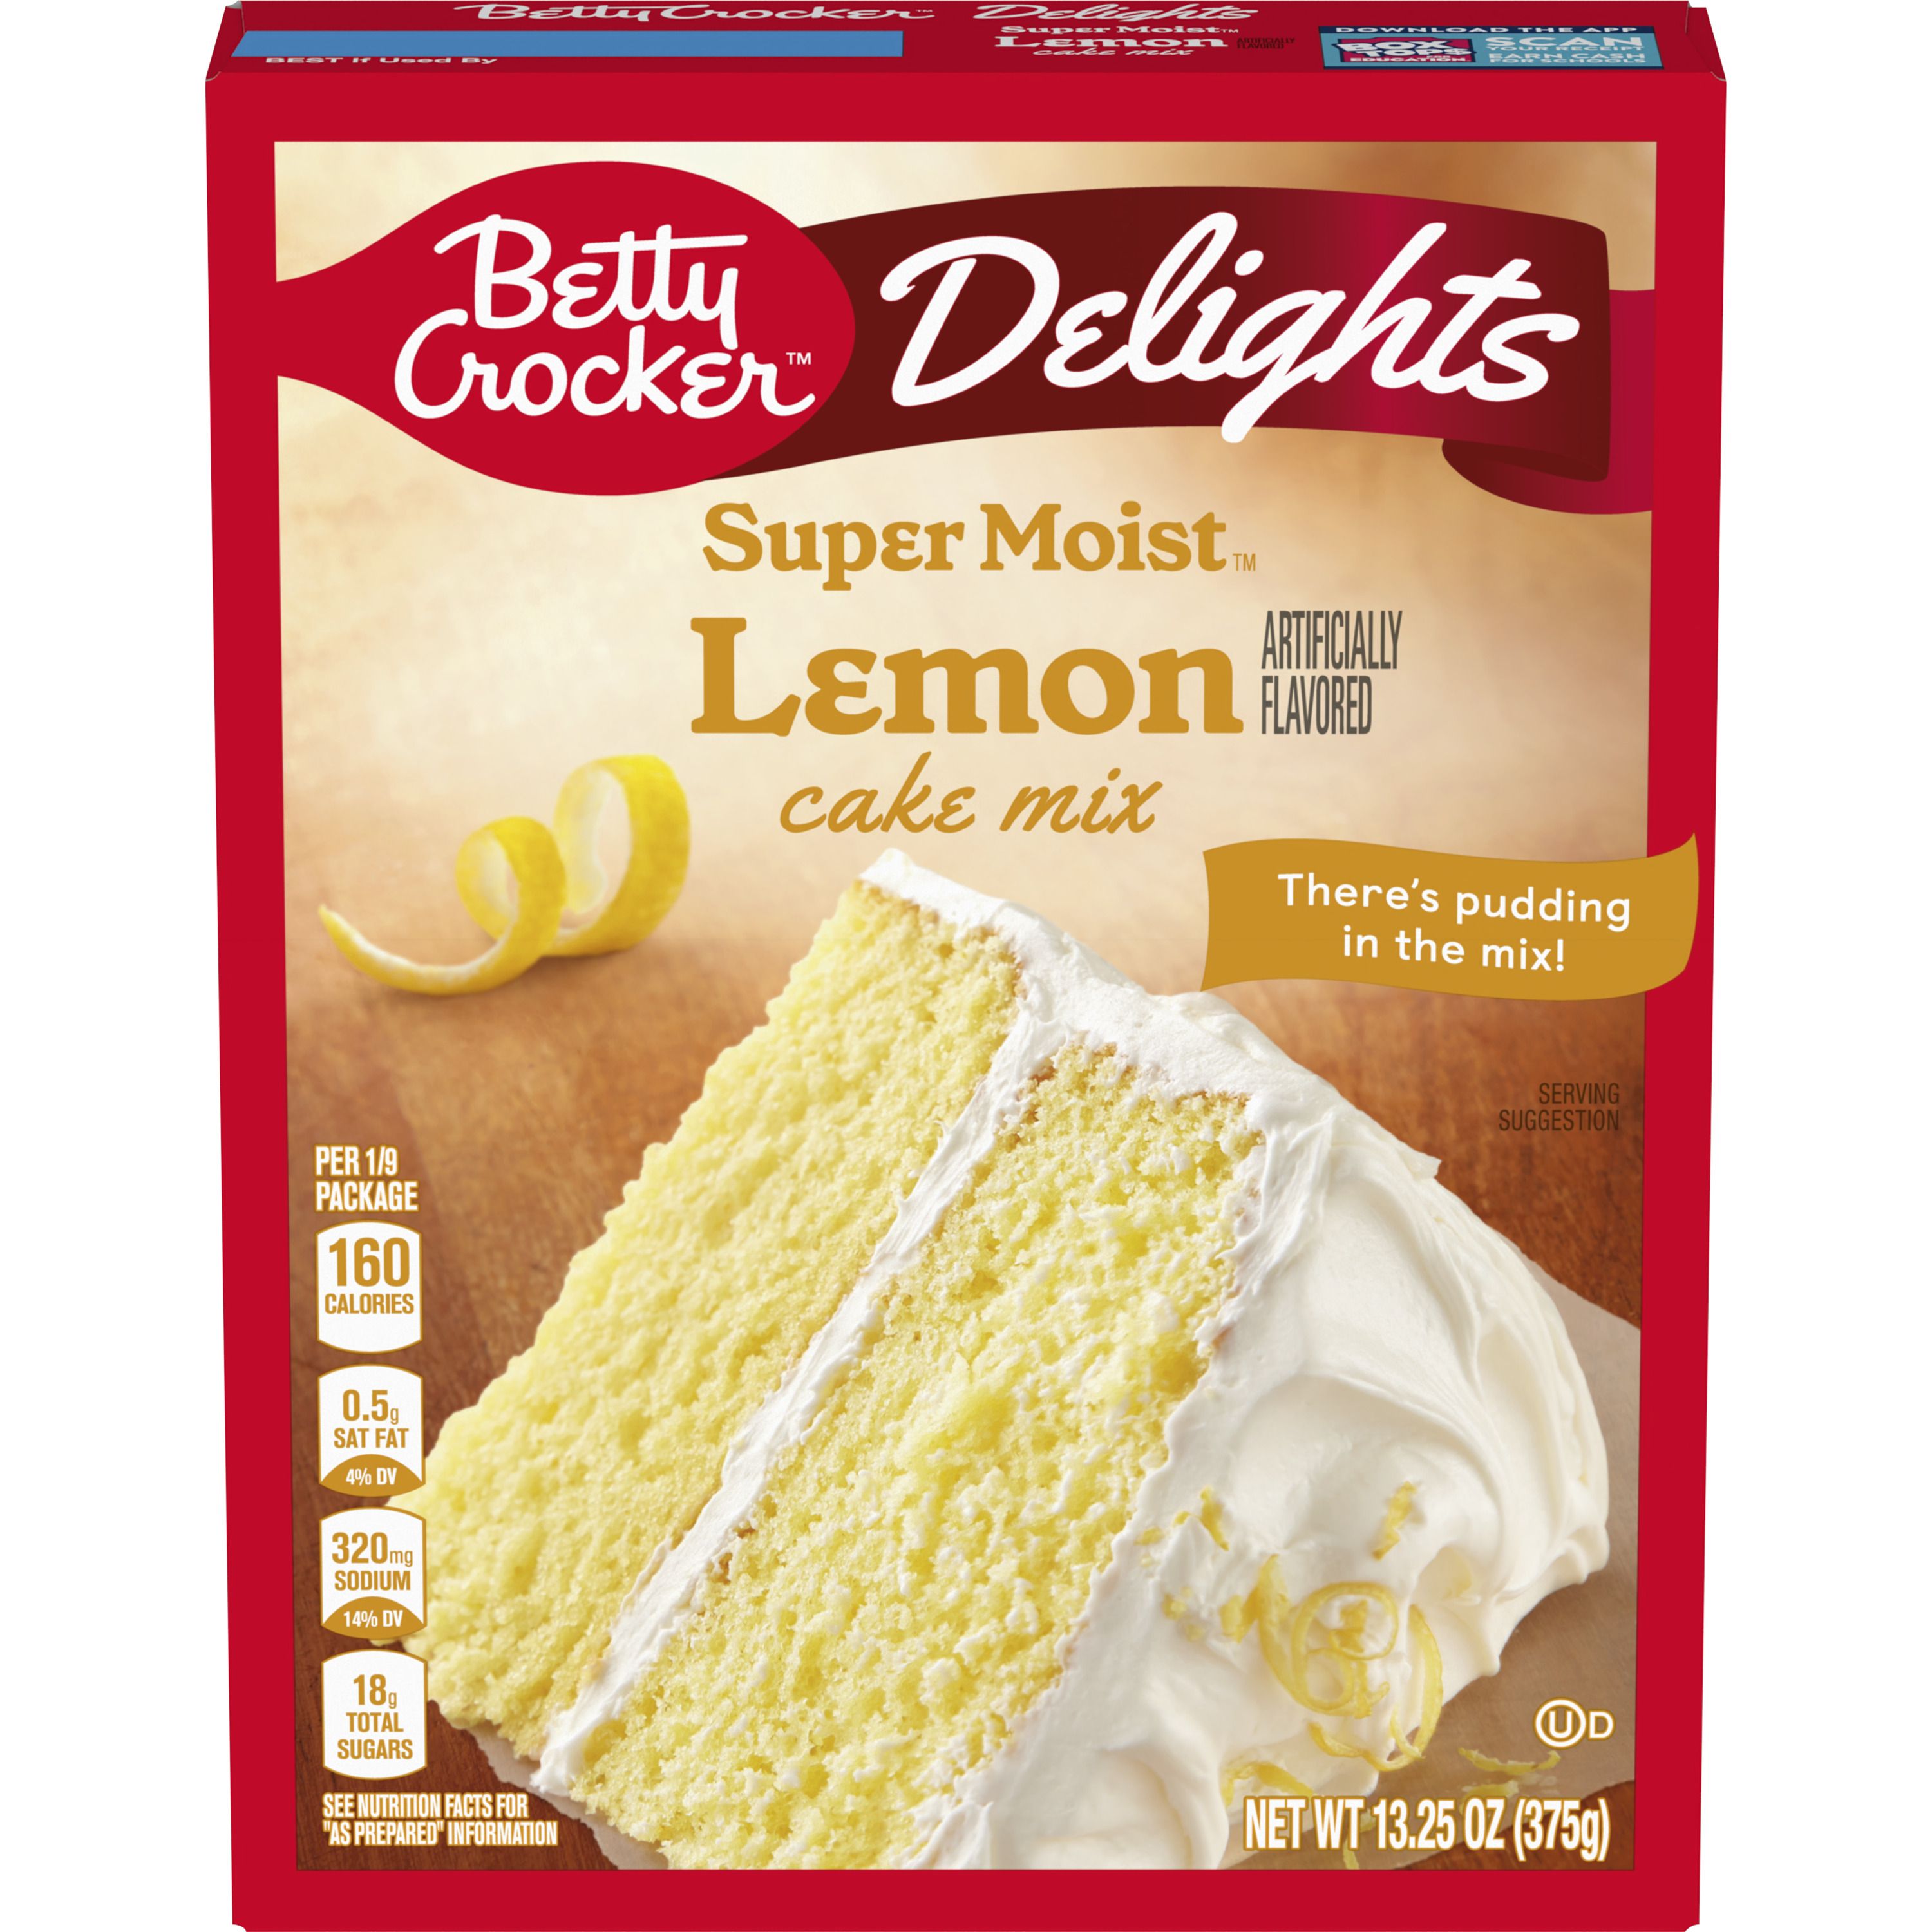 Betty Crocker Delights Super Moist Lemon Cake Mix, 13.25 oz. - Front